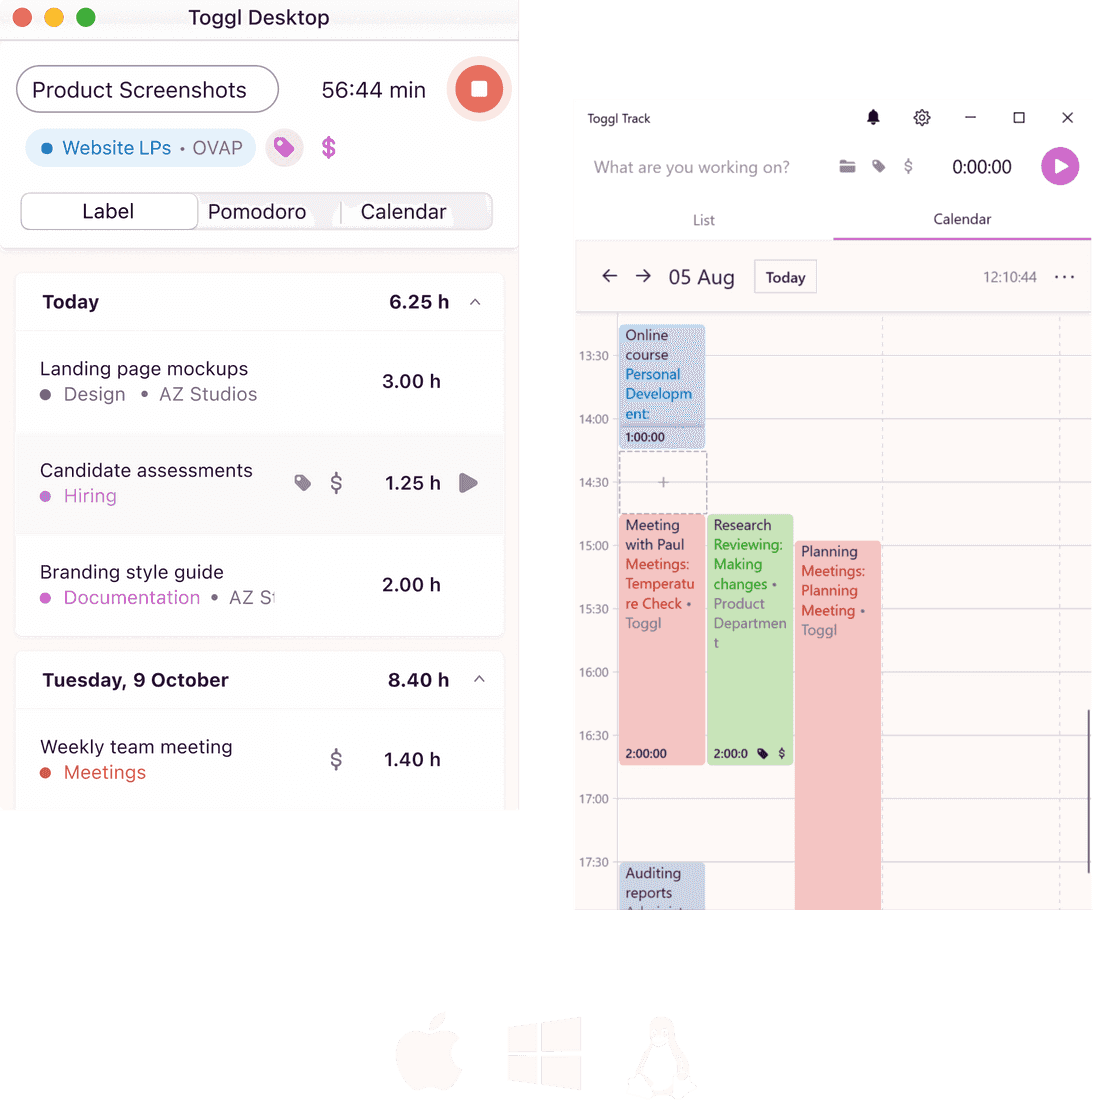 Toggl Track desktop app for Mac and Windows